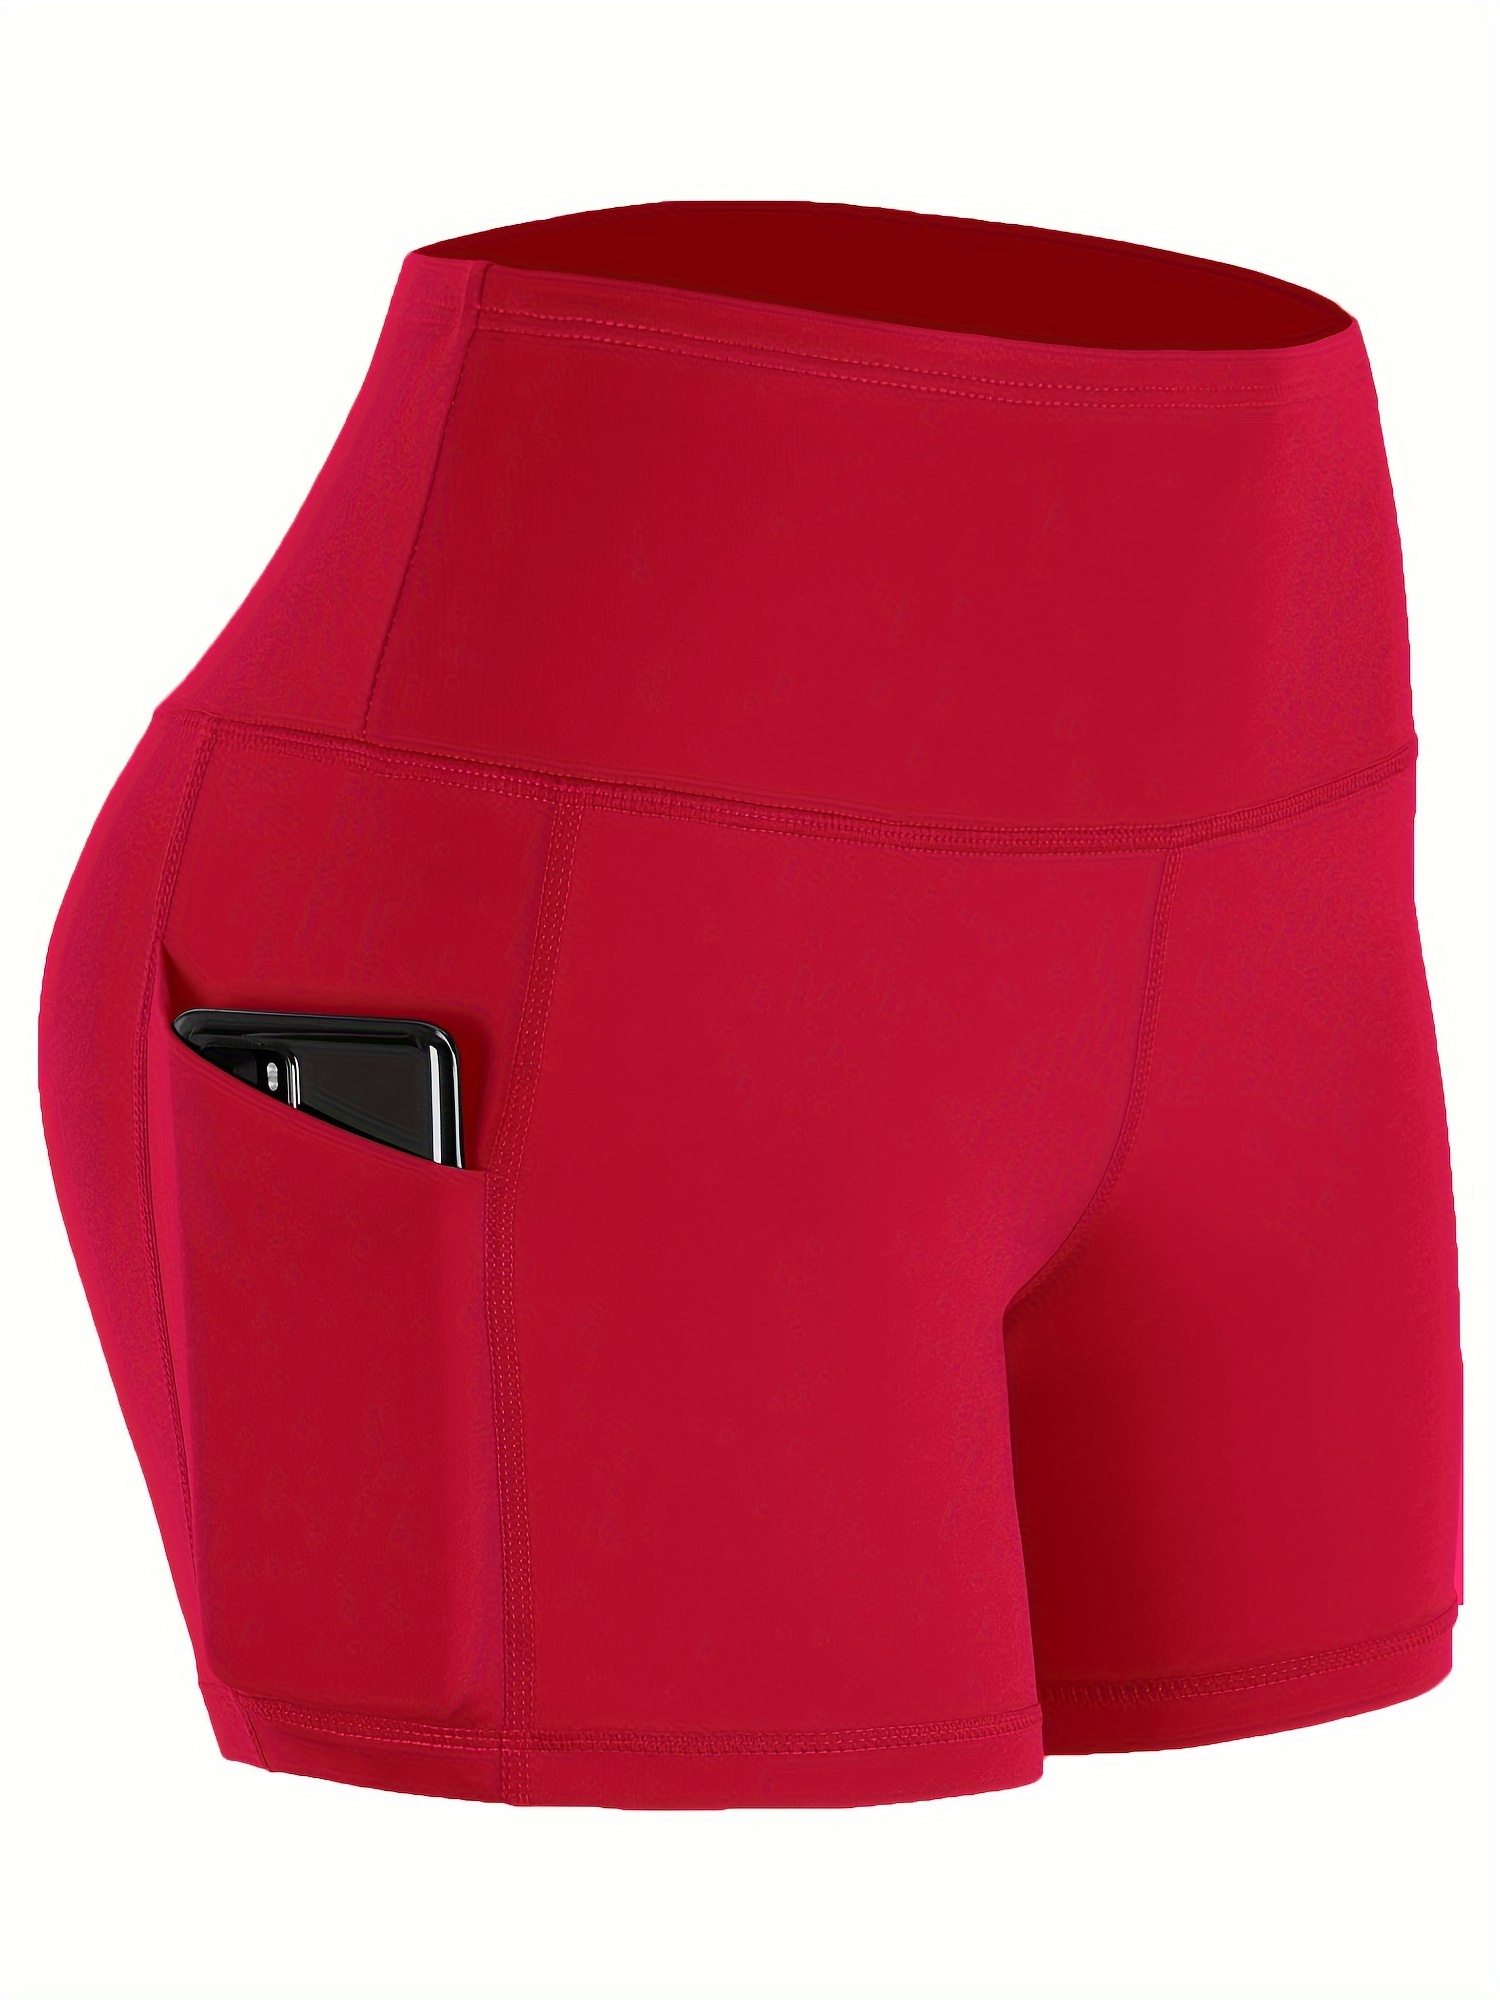 Women's Biker Shorts - Red Pow - Digital Rawness Women's Activewear